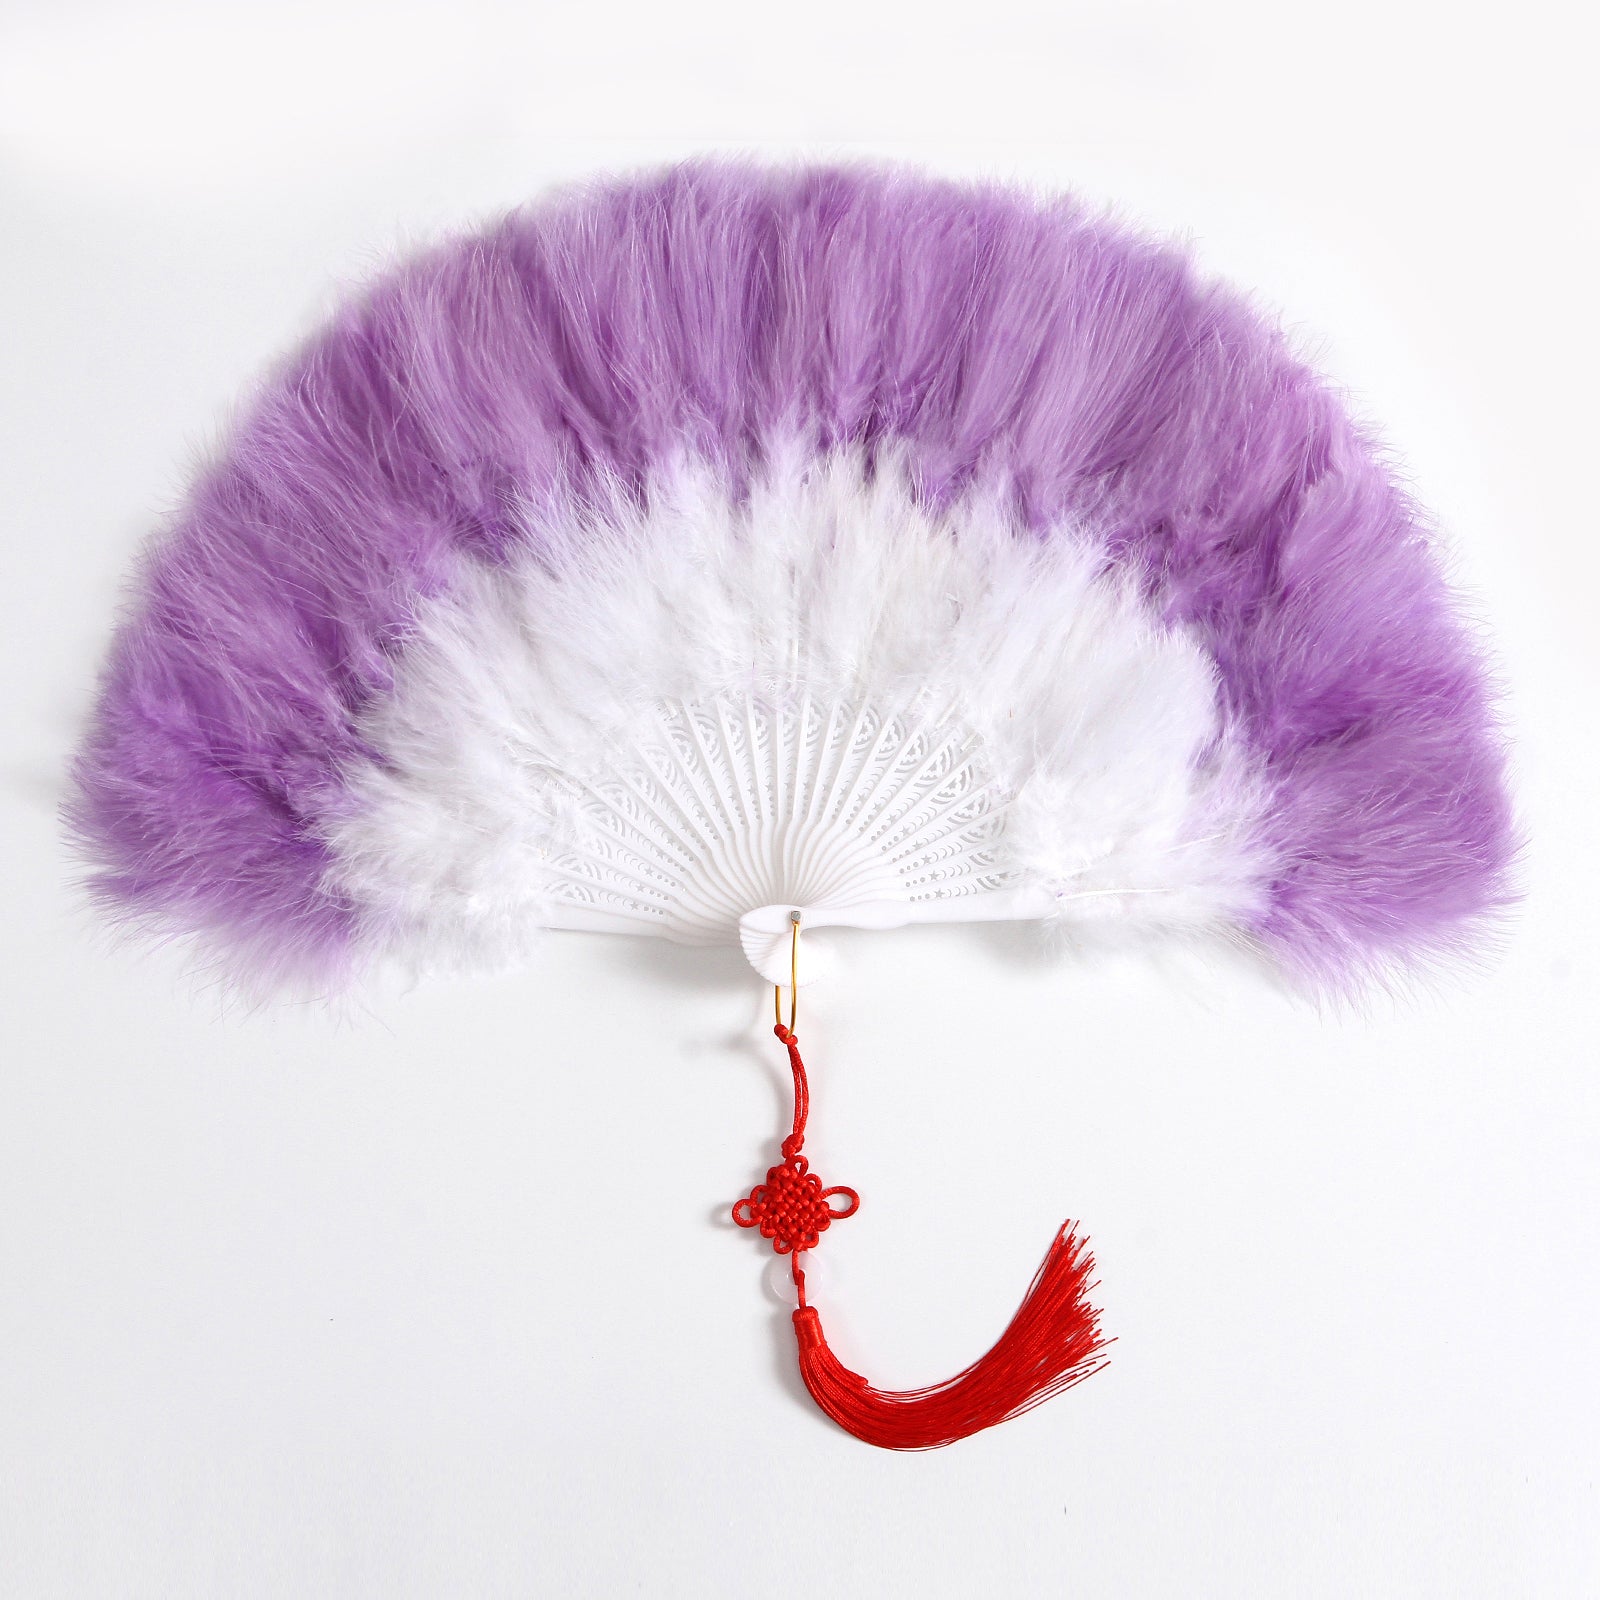 Marabou Feather Fan Multi Color - Pink Orient/Black